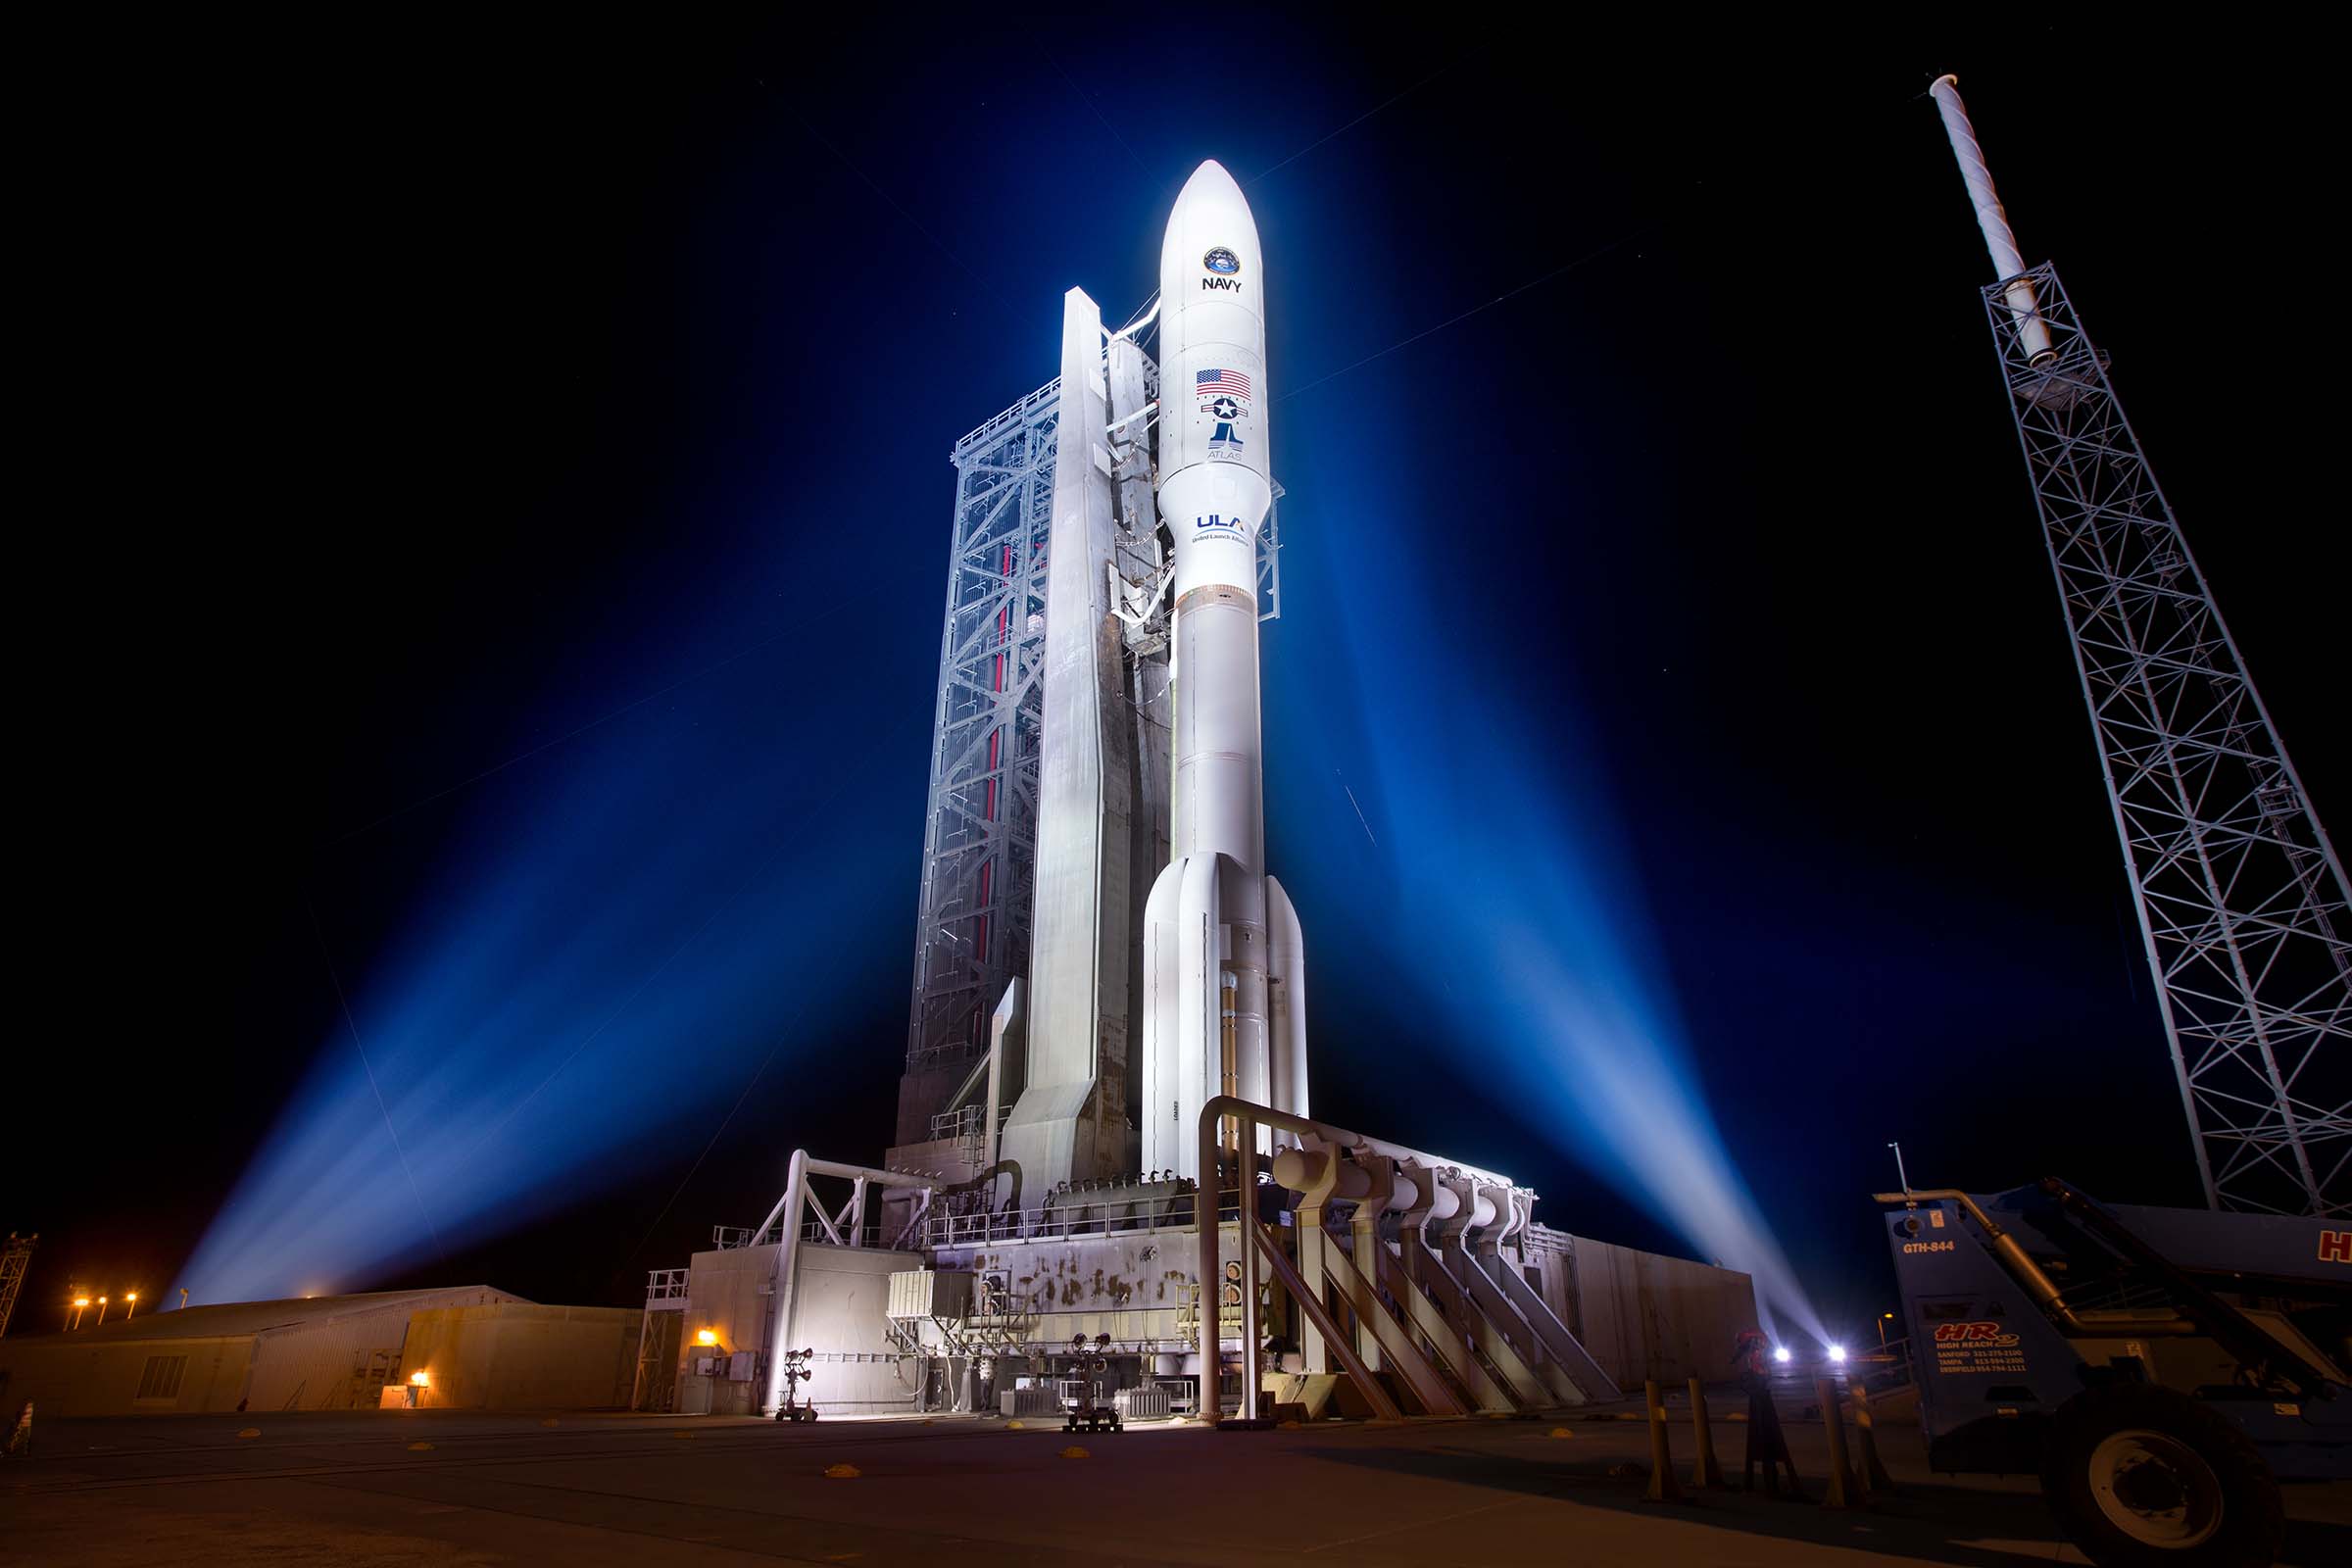 MUOS-5 prior to launch. June 23, 2016